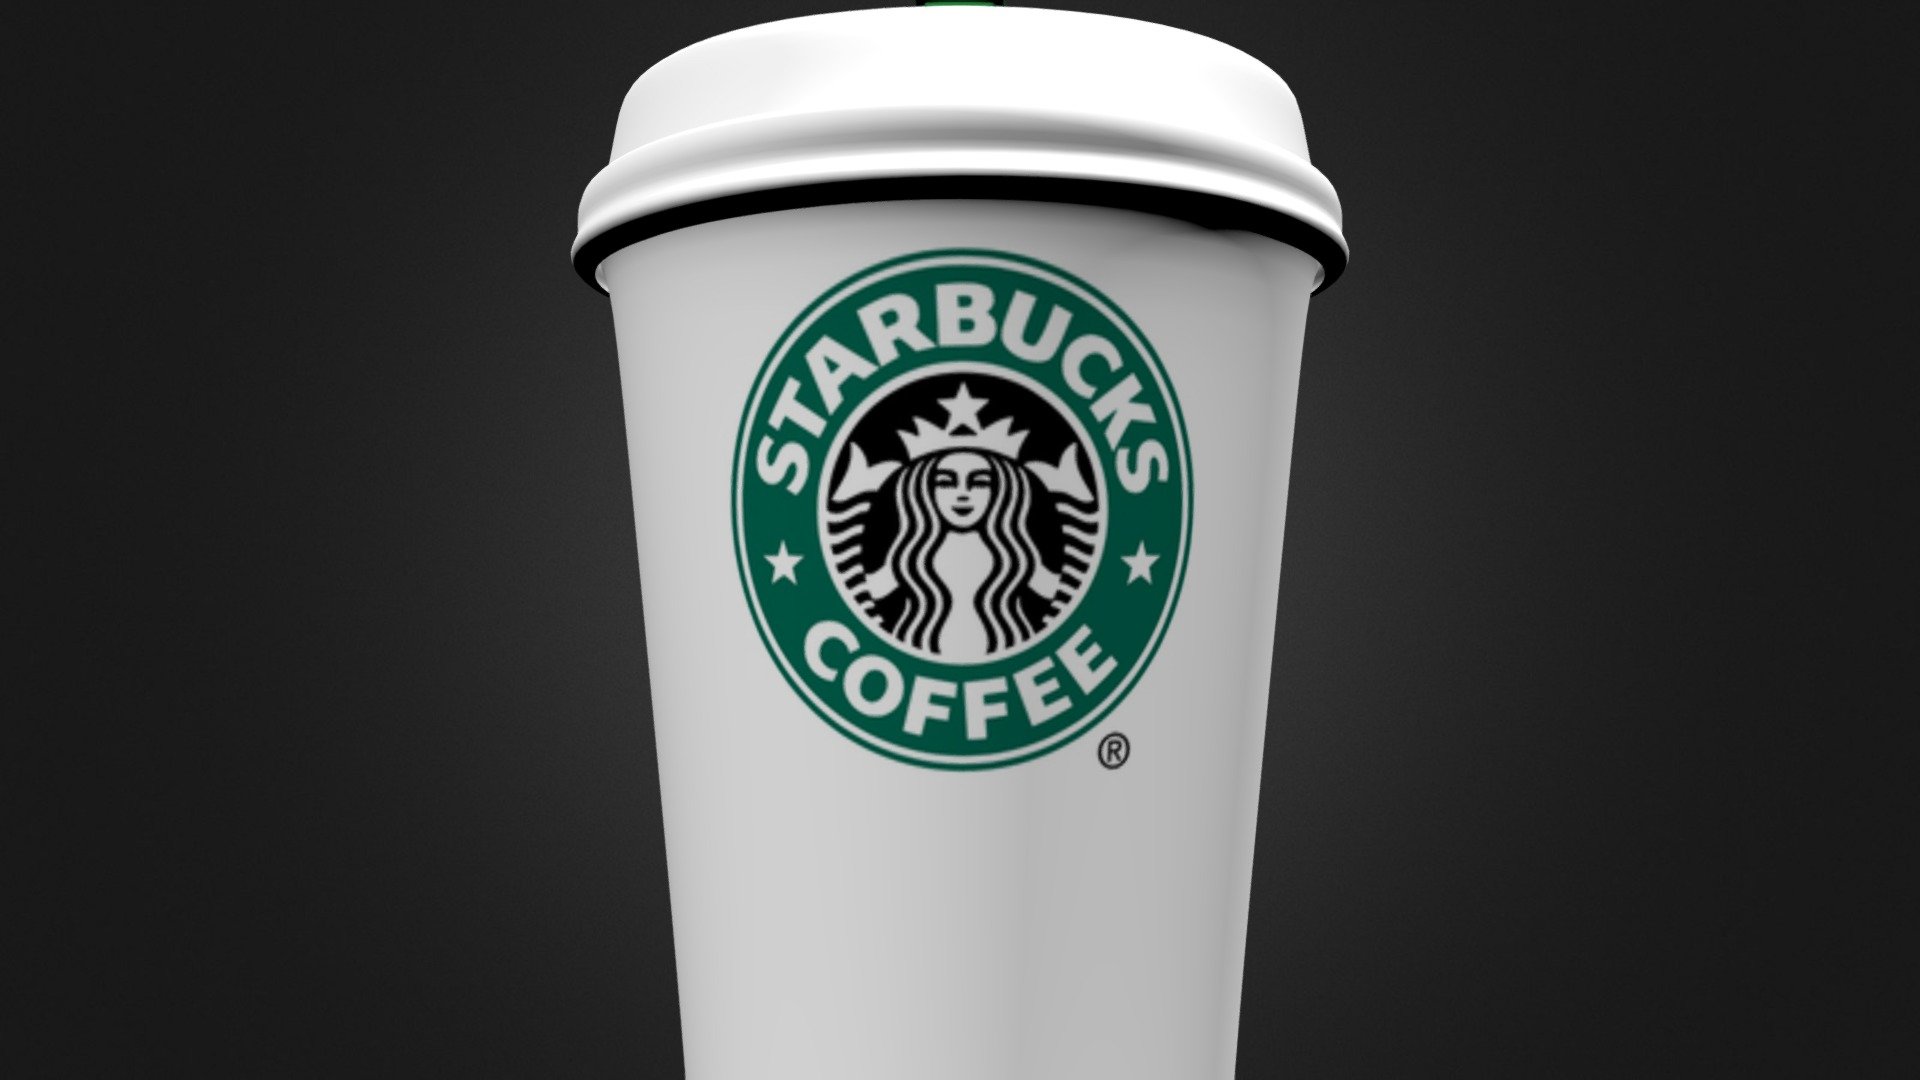 Who doesn't love a good Starbucks coffee? - Starbucks Cup - 3D model by bossestrenders 3d model